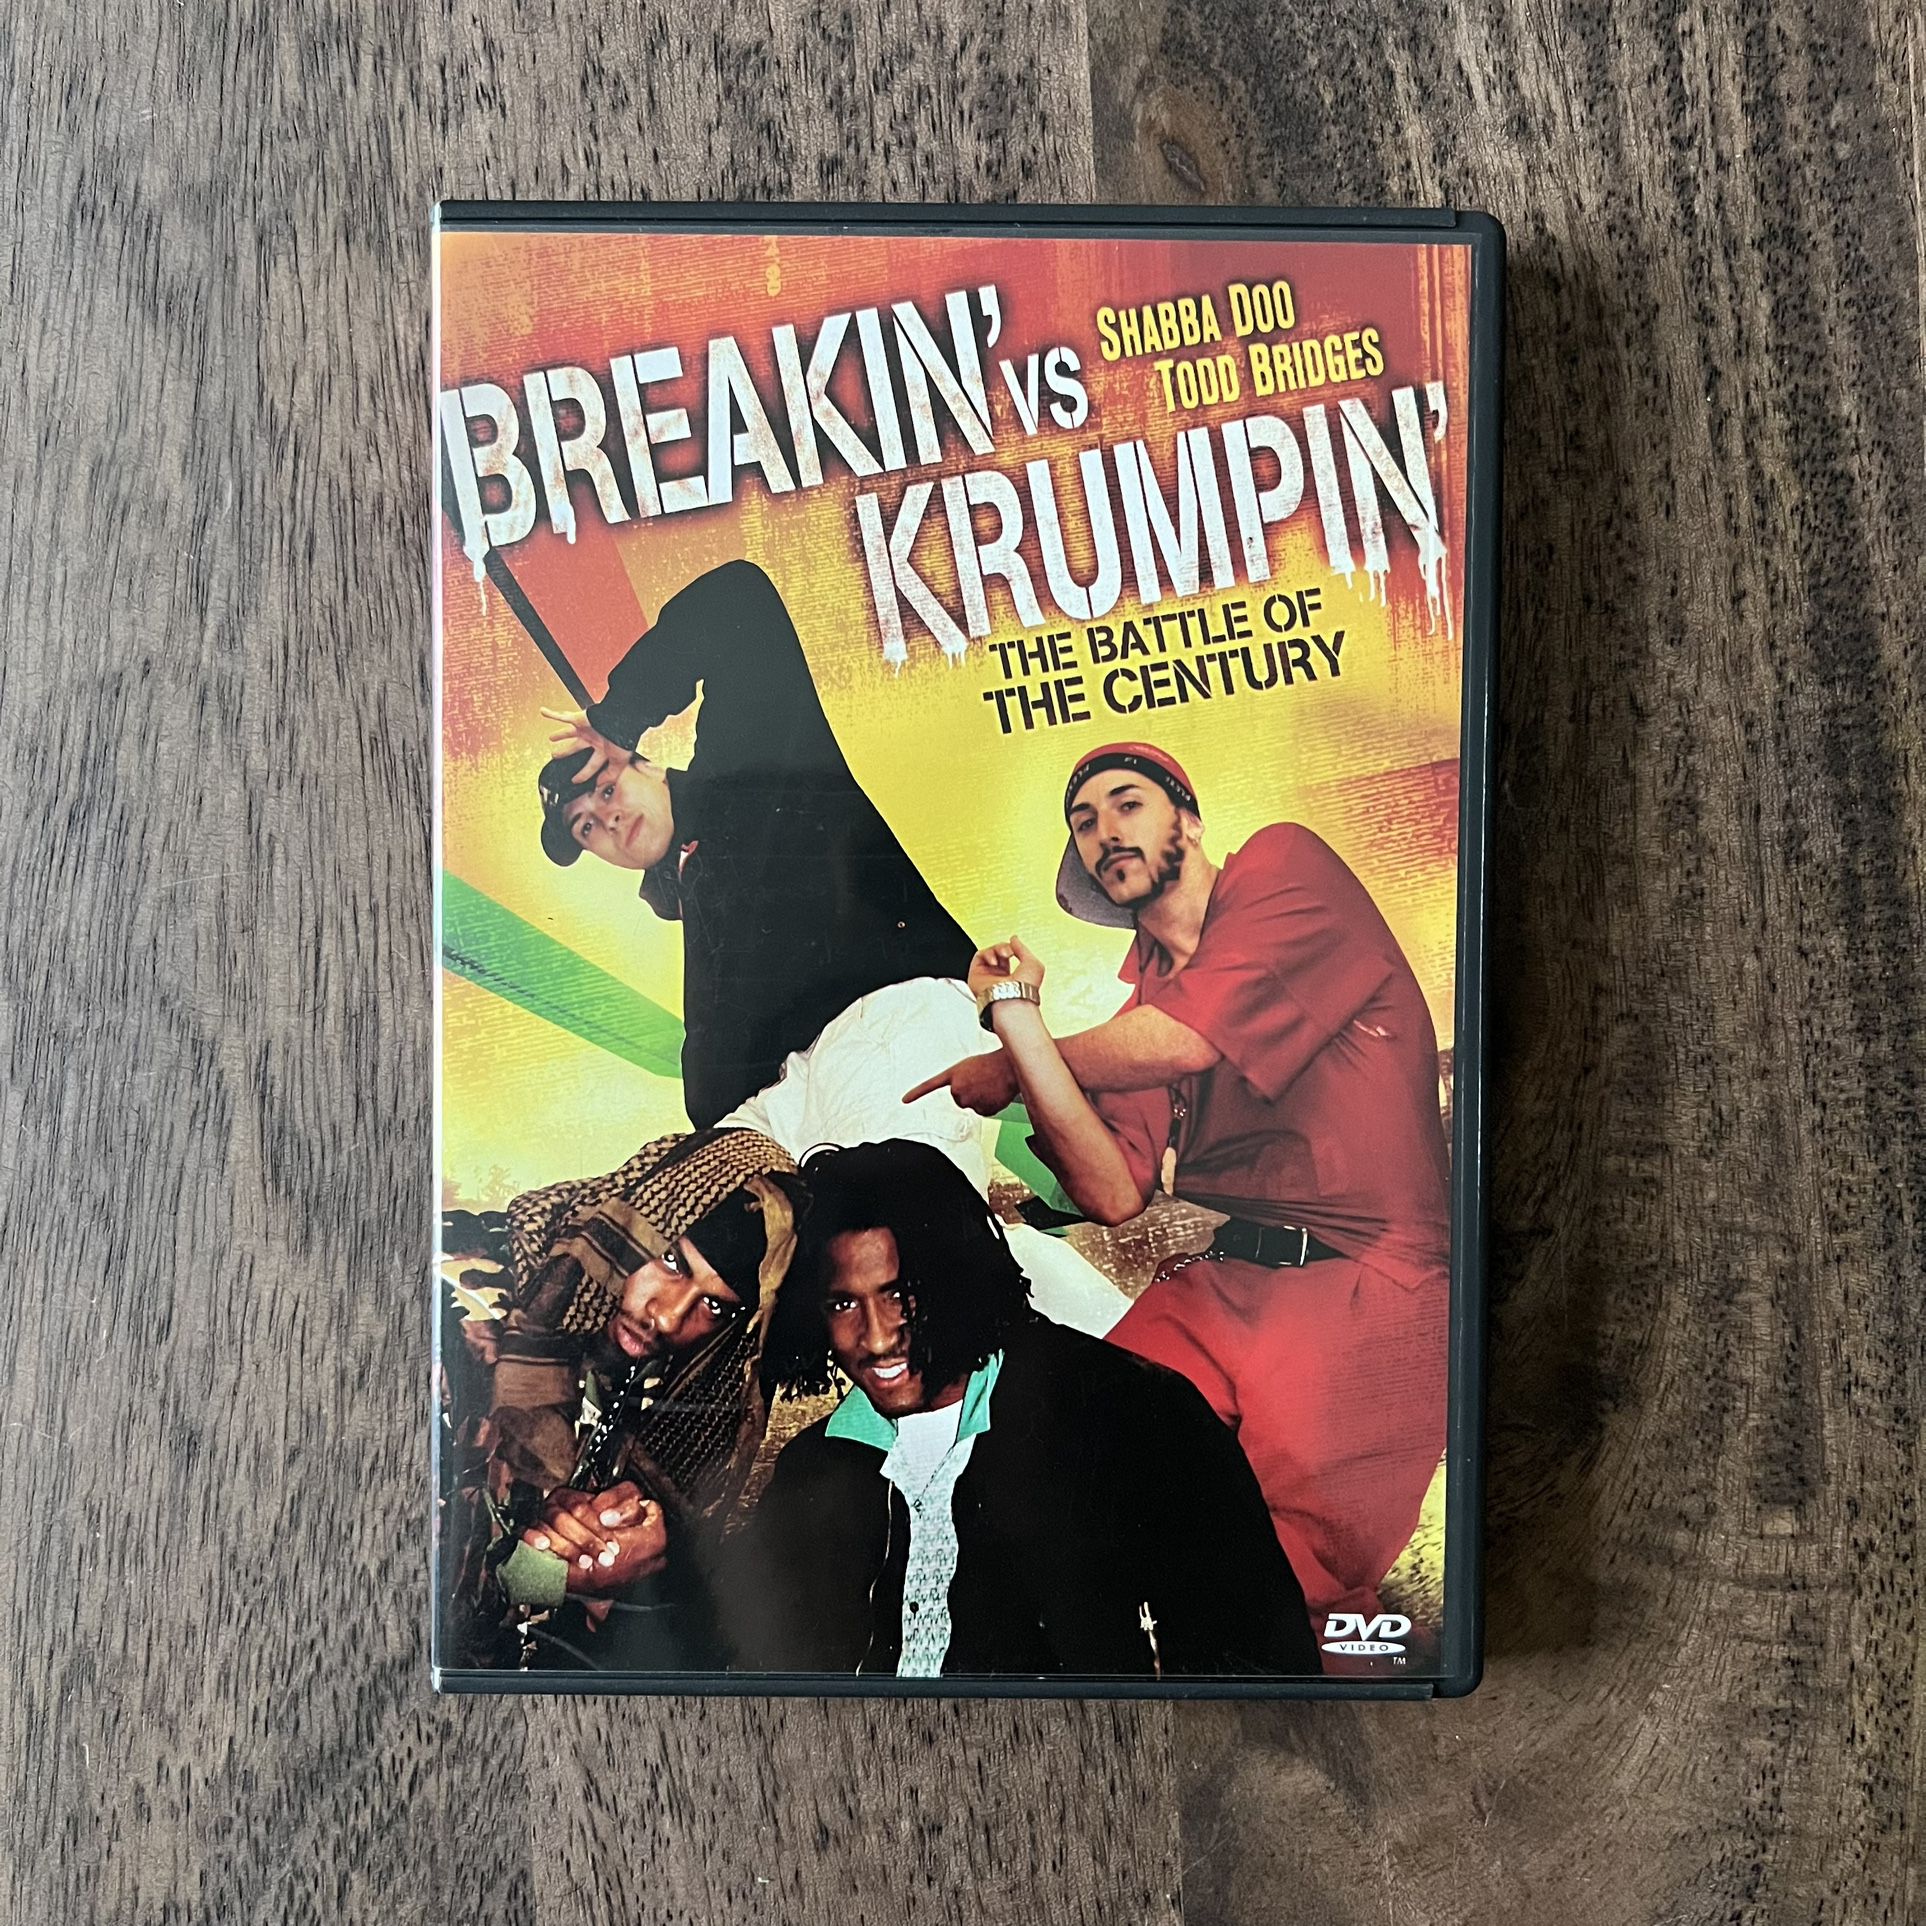 Breakin’ vs Krumpin’ Street Dance - Battle of the Century Hip Hop Bboy DVD Movie